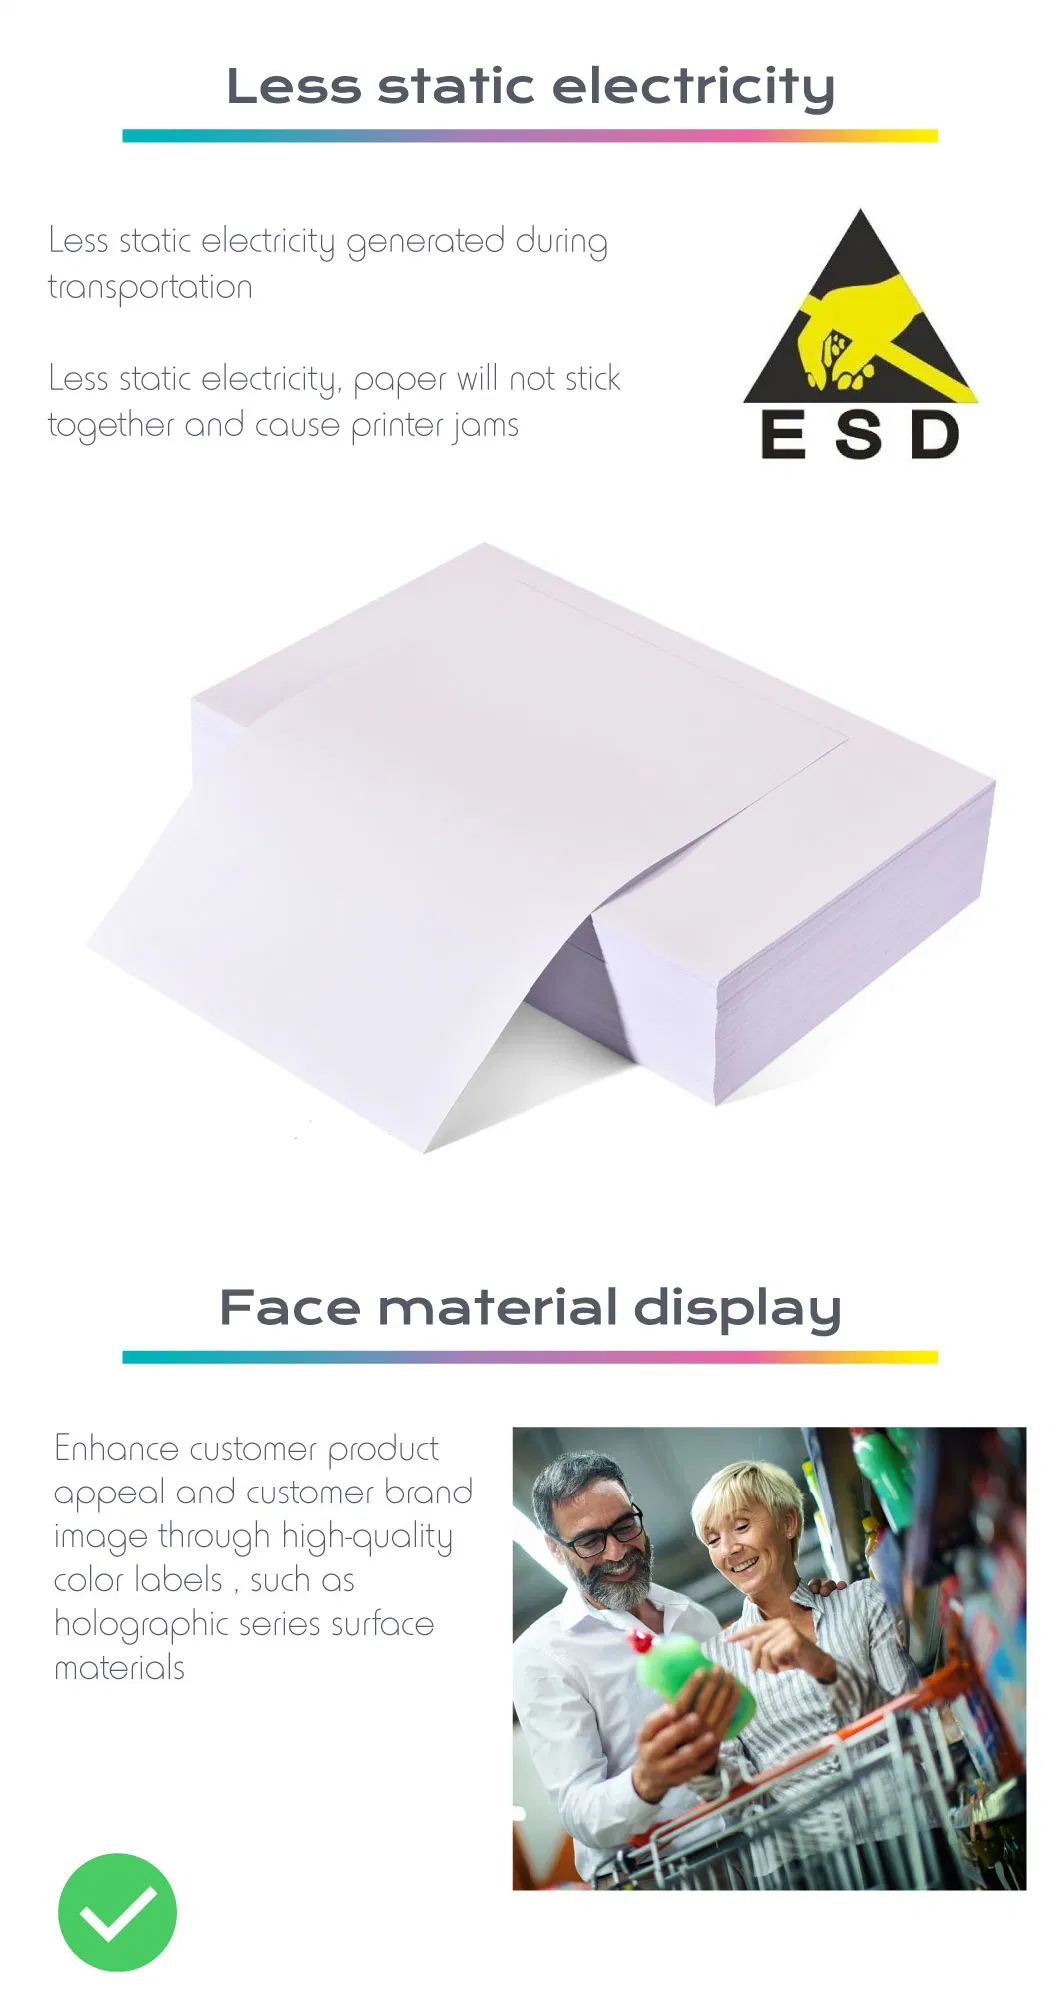 Custom Sticker Digital Printing Rightint Carton A3, A3+, OEM economic blank label